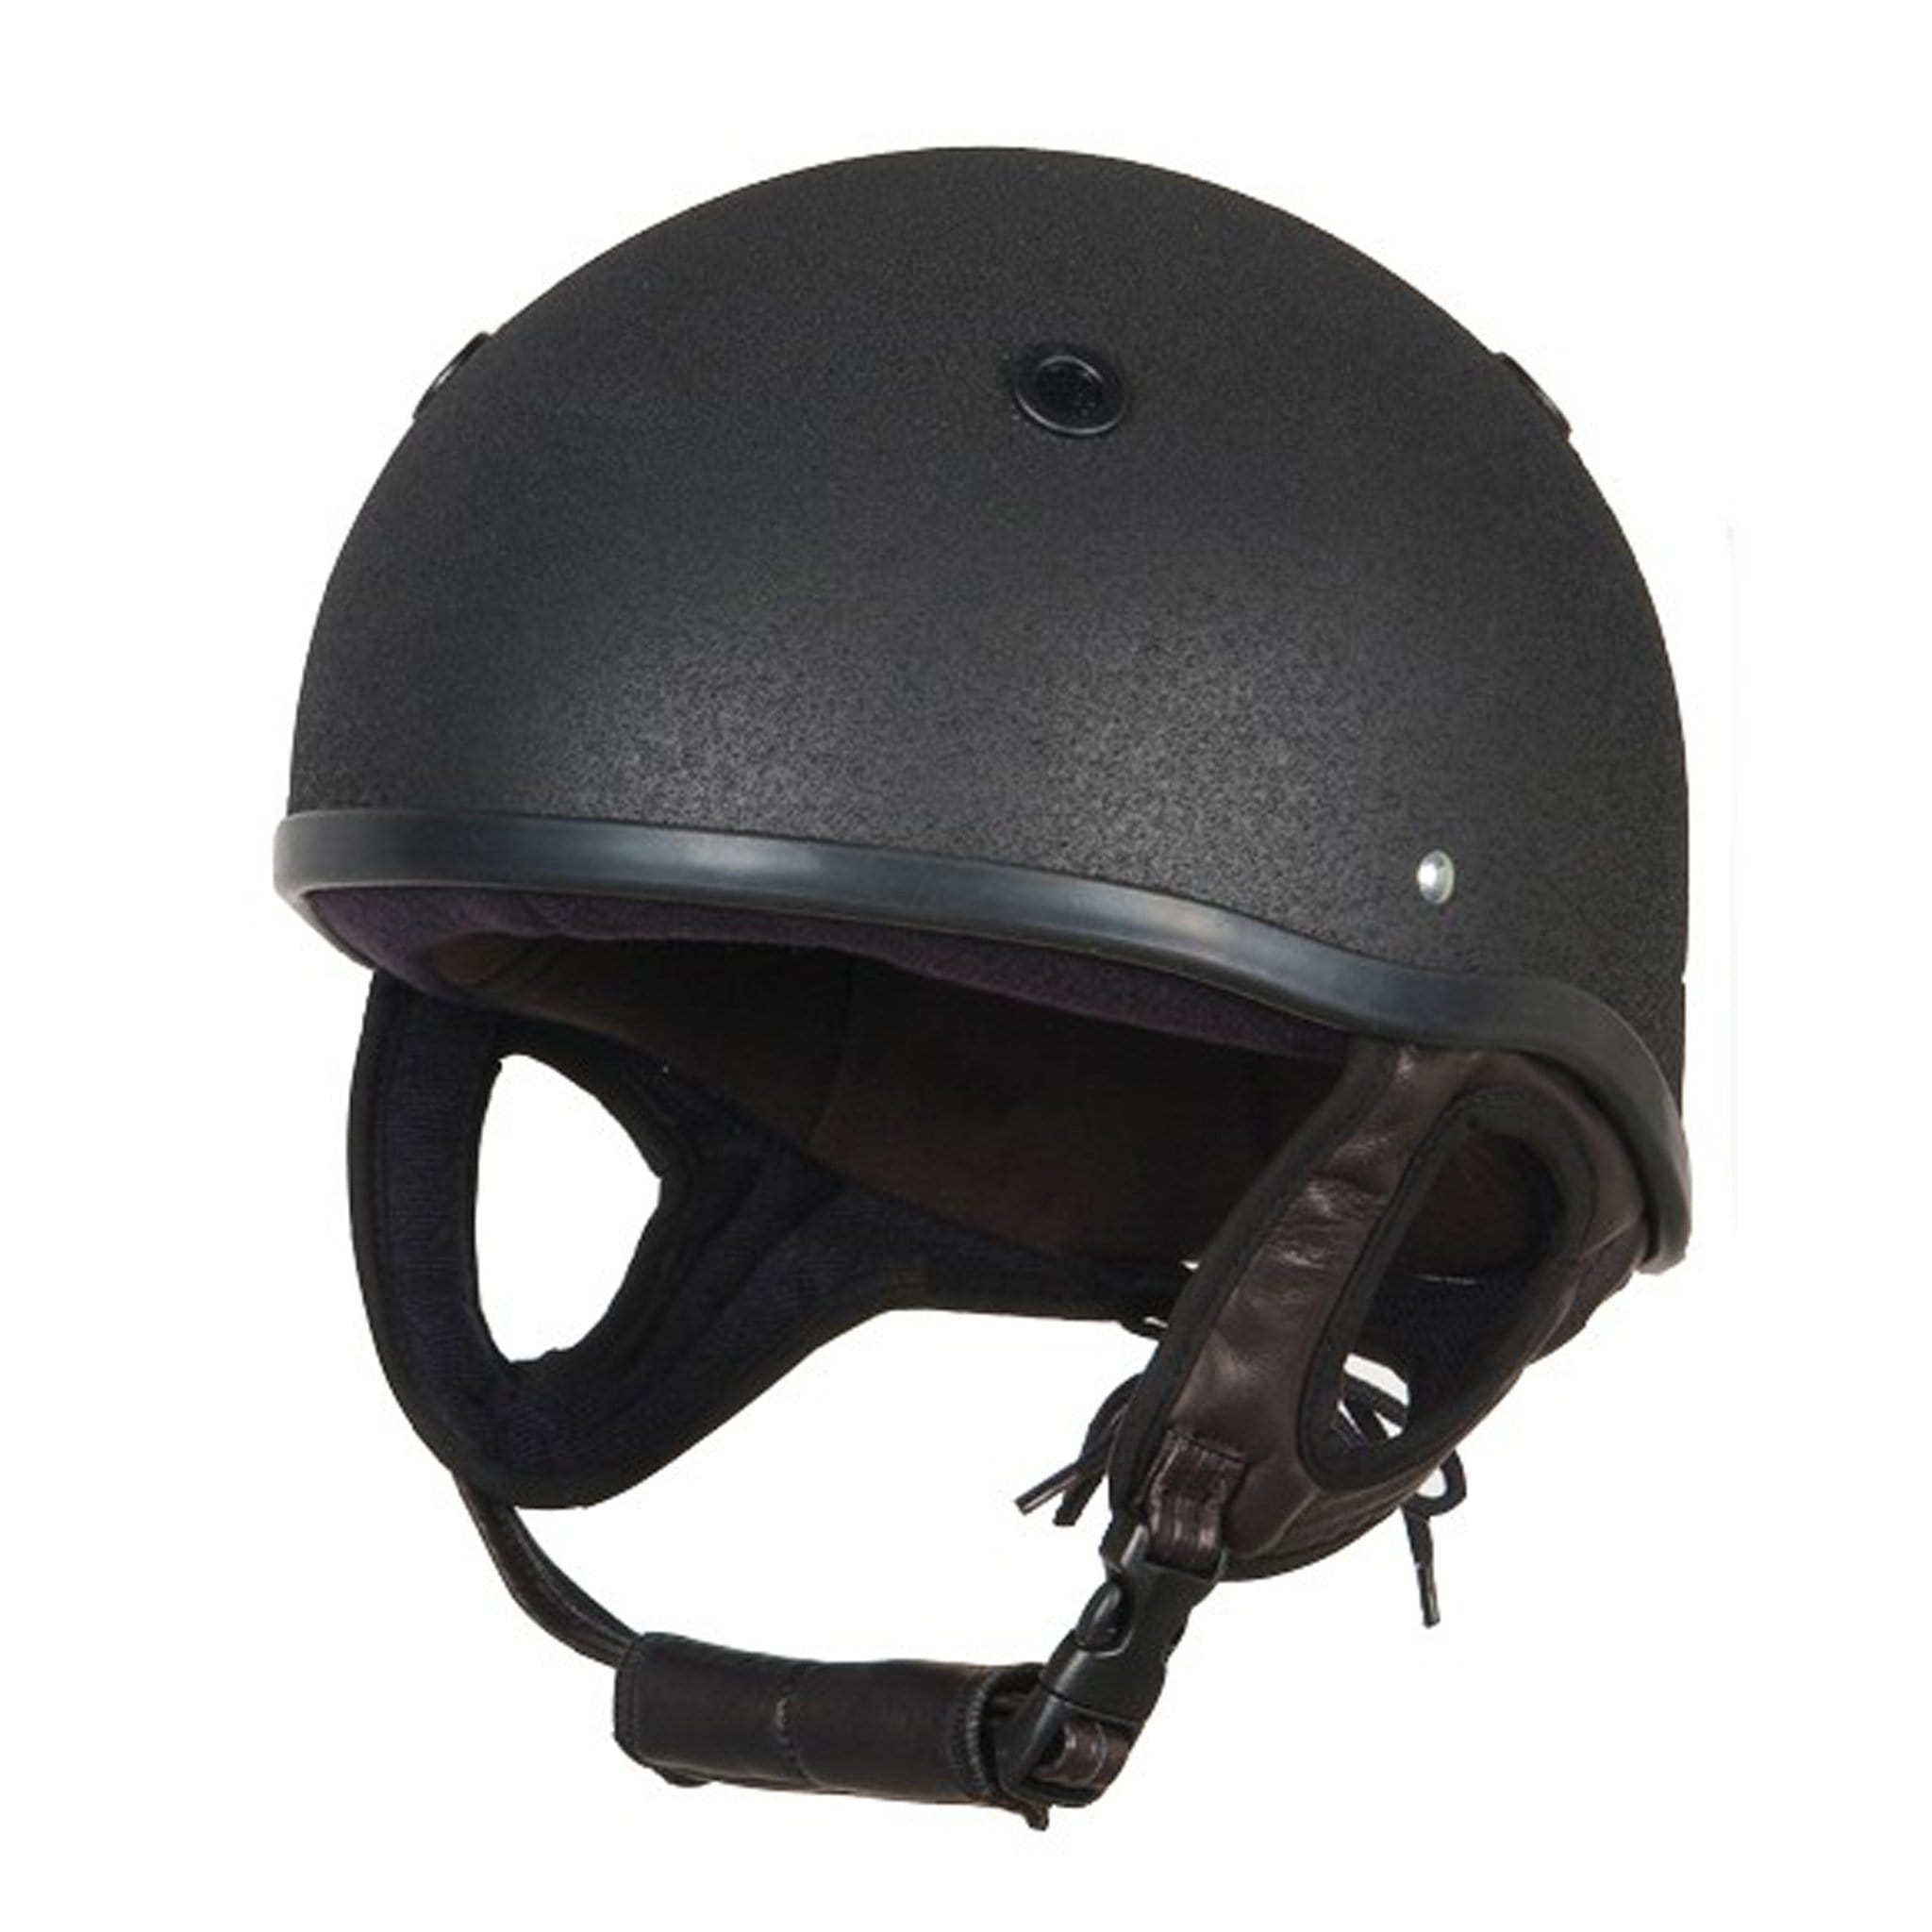 Champion Pro-lite Deluxe Helmet